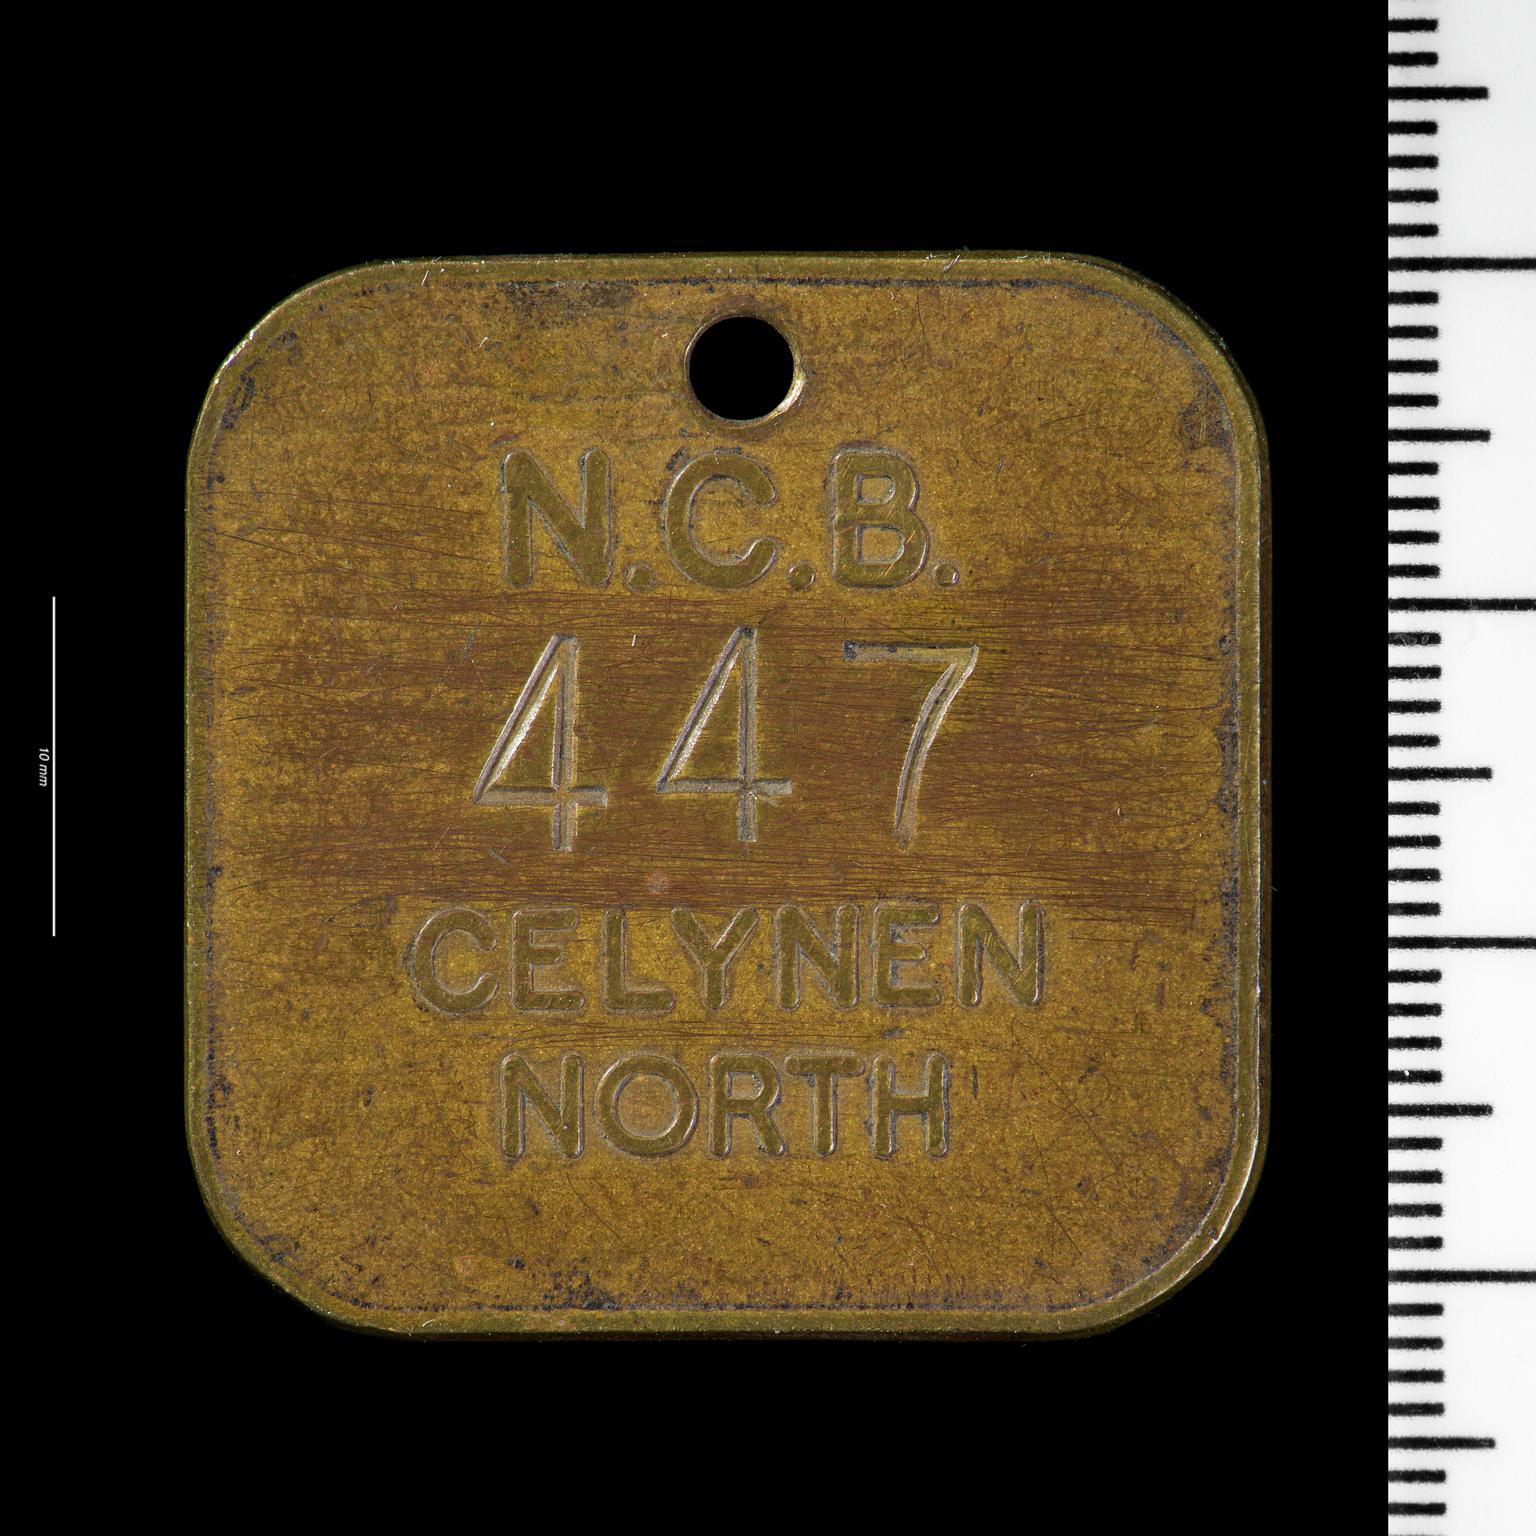 N.C.B. Celynen North, lamp check